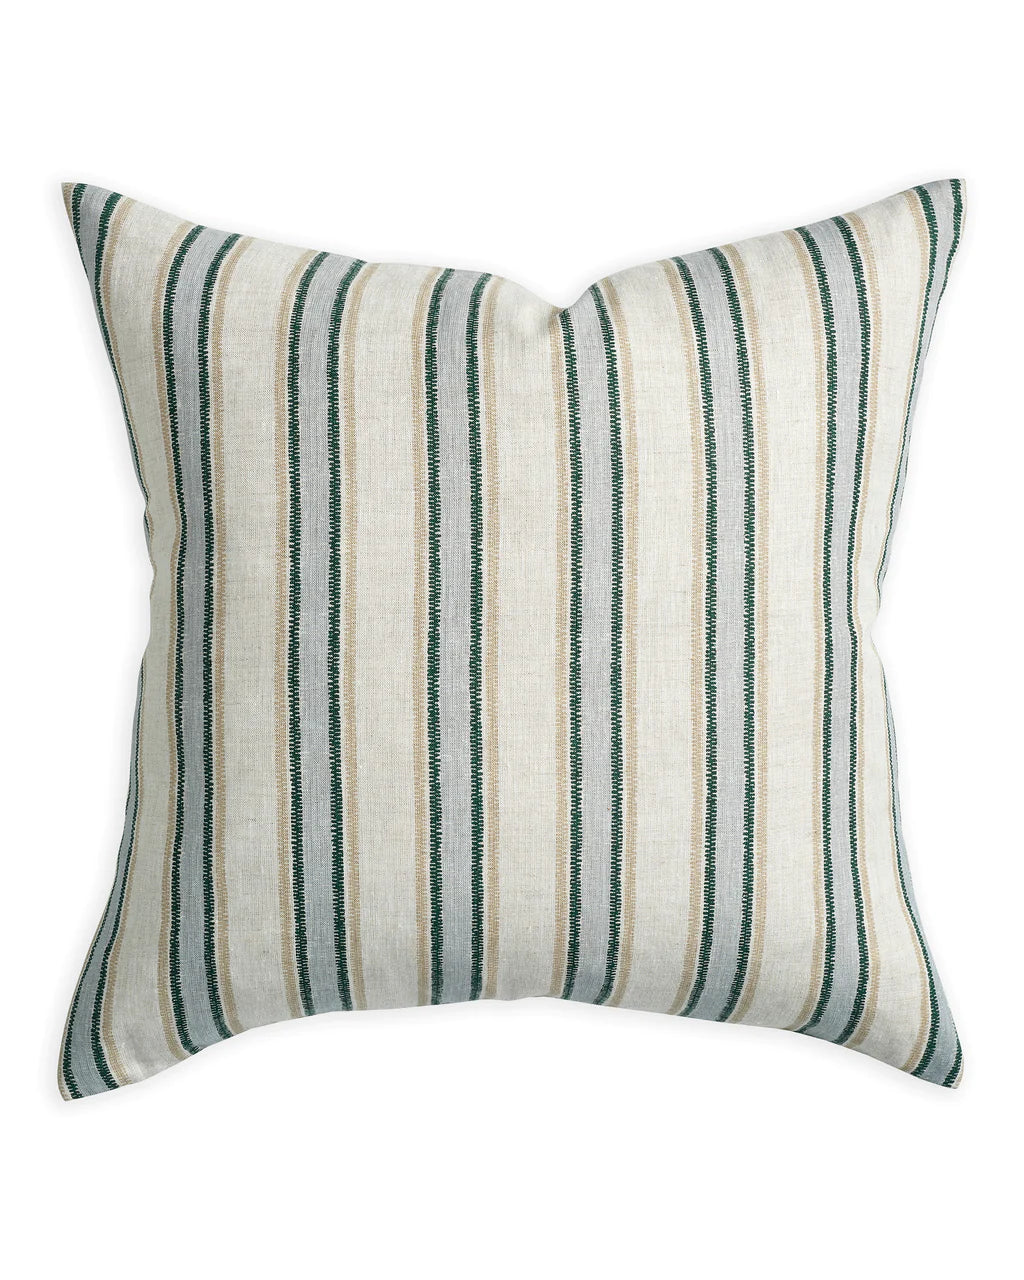 Walter G Lido Byzantine Linen Cushion 55x55